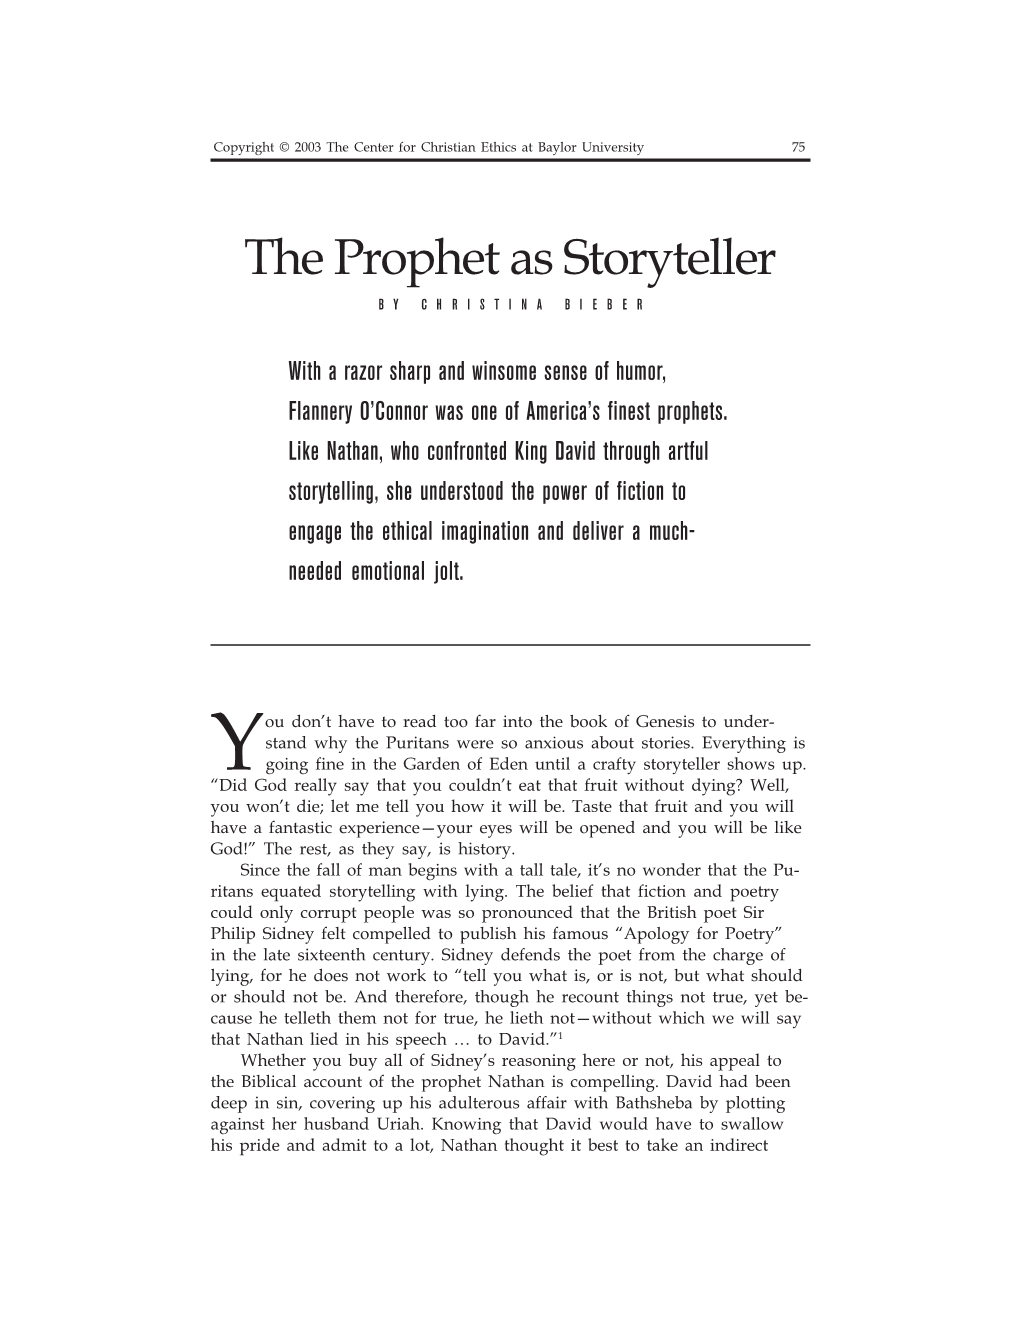 The Prophet As Storyteller by CHRISTINA BIEBER